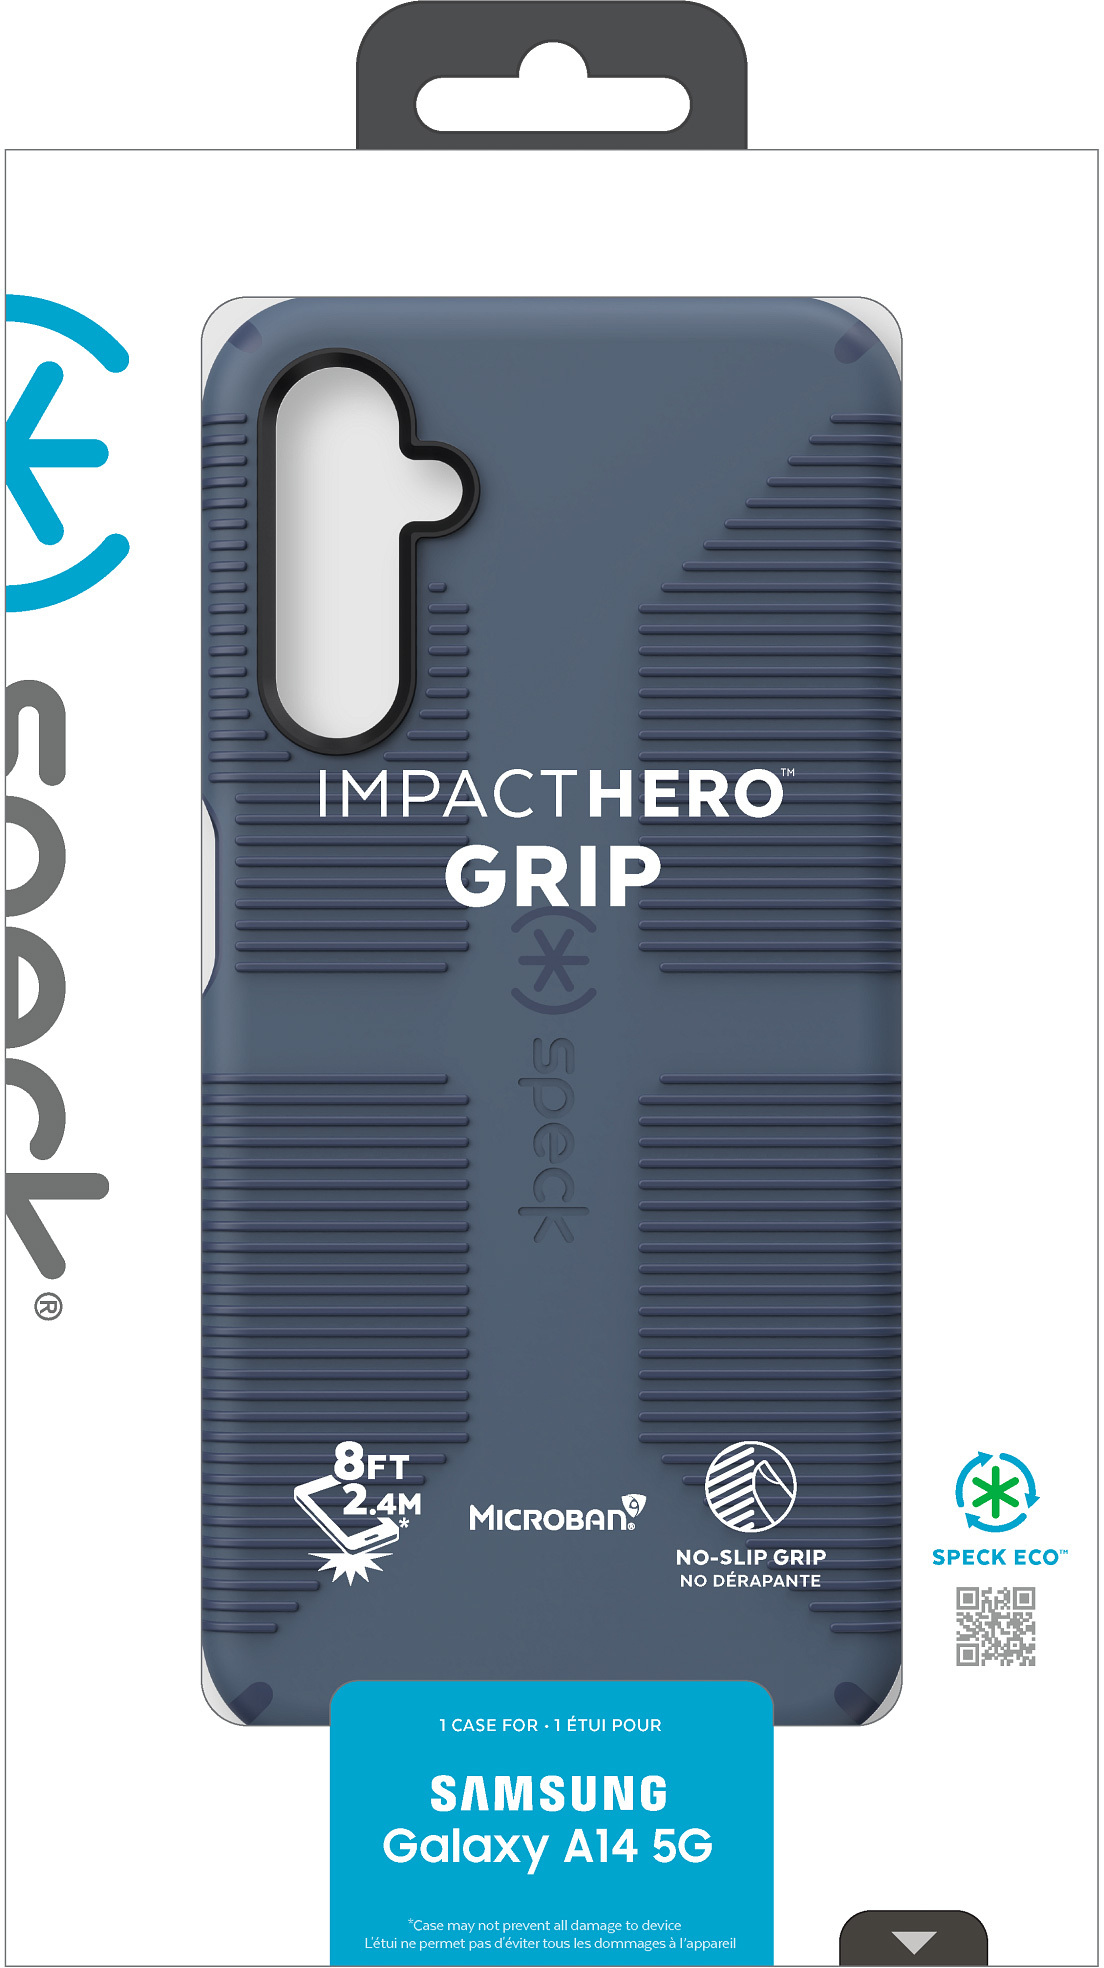 Tas SPECK Impact Hero Grip Samsung Galaxy A14 Thunder Blue